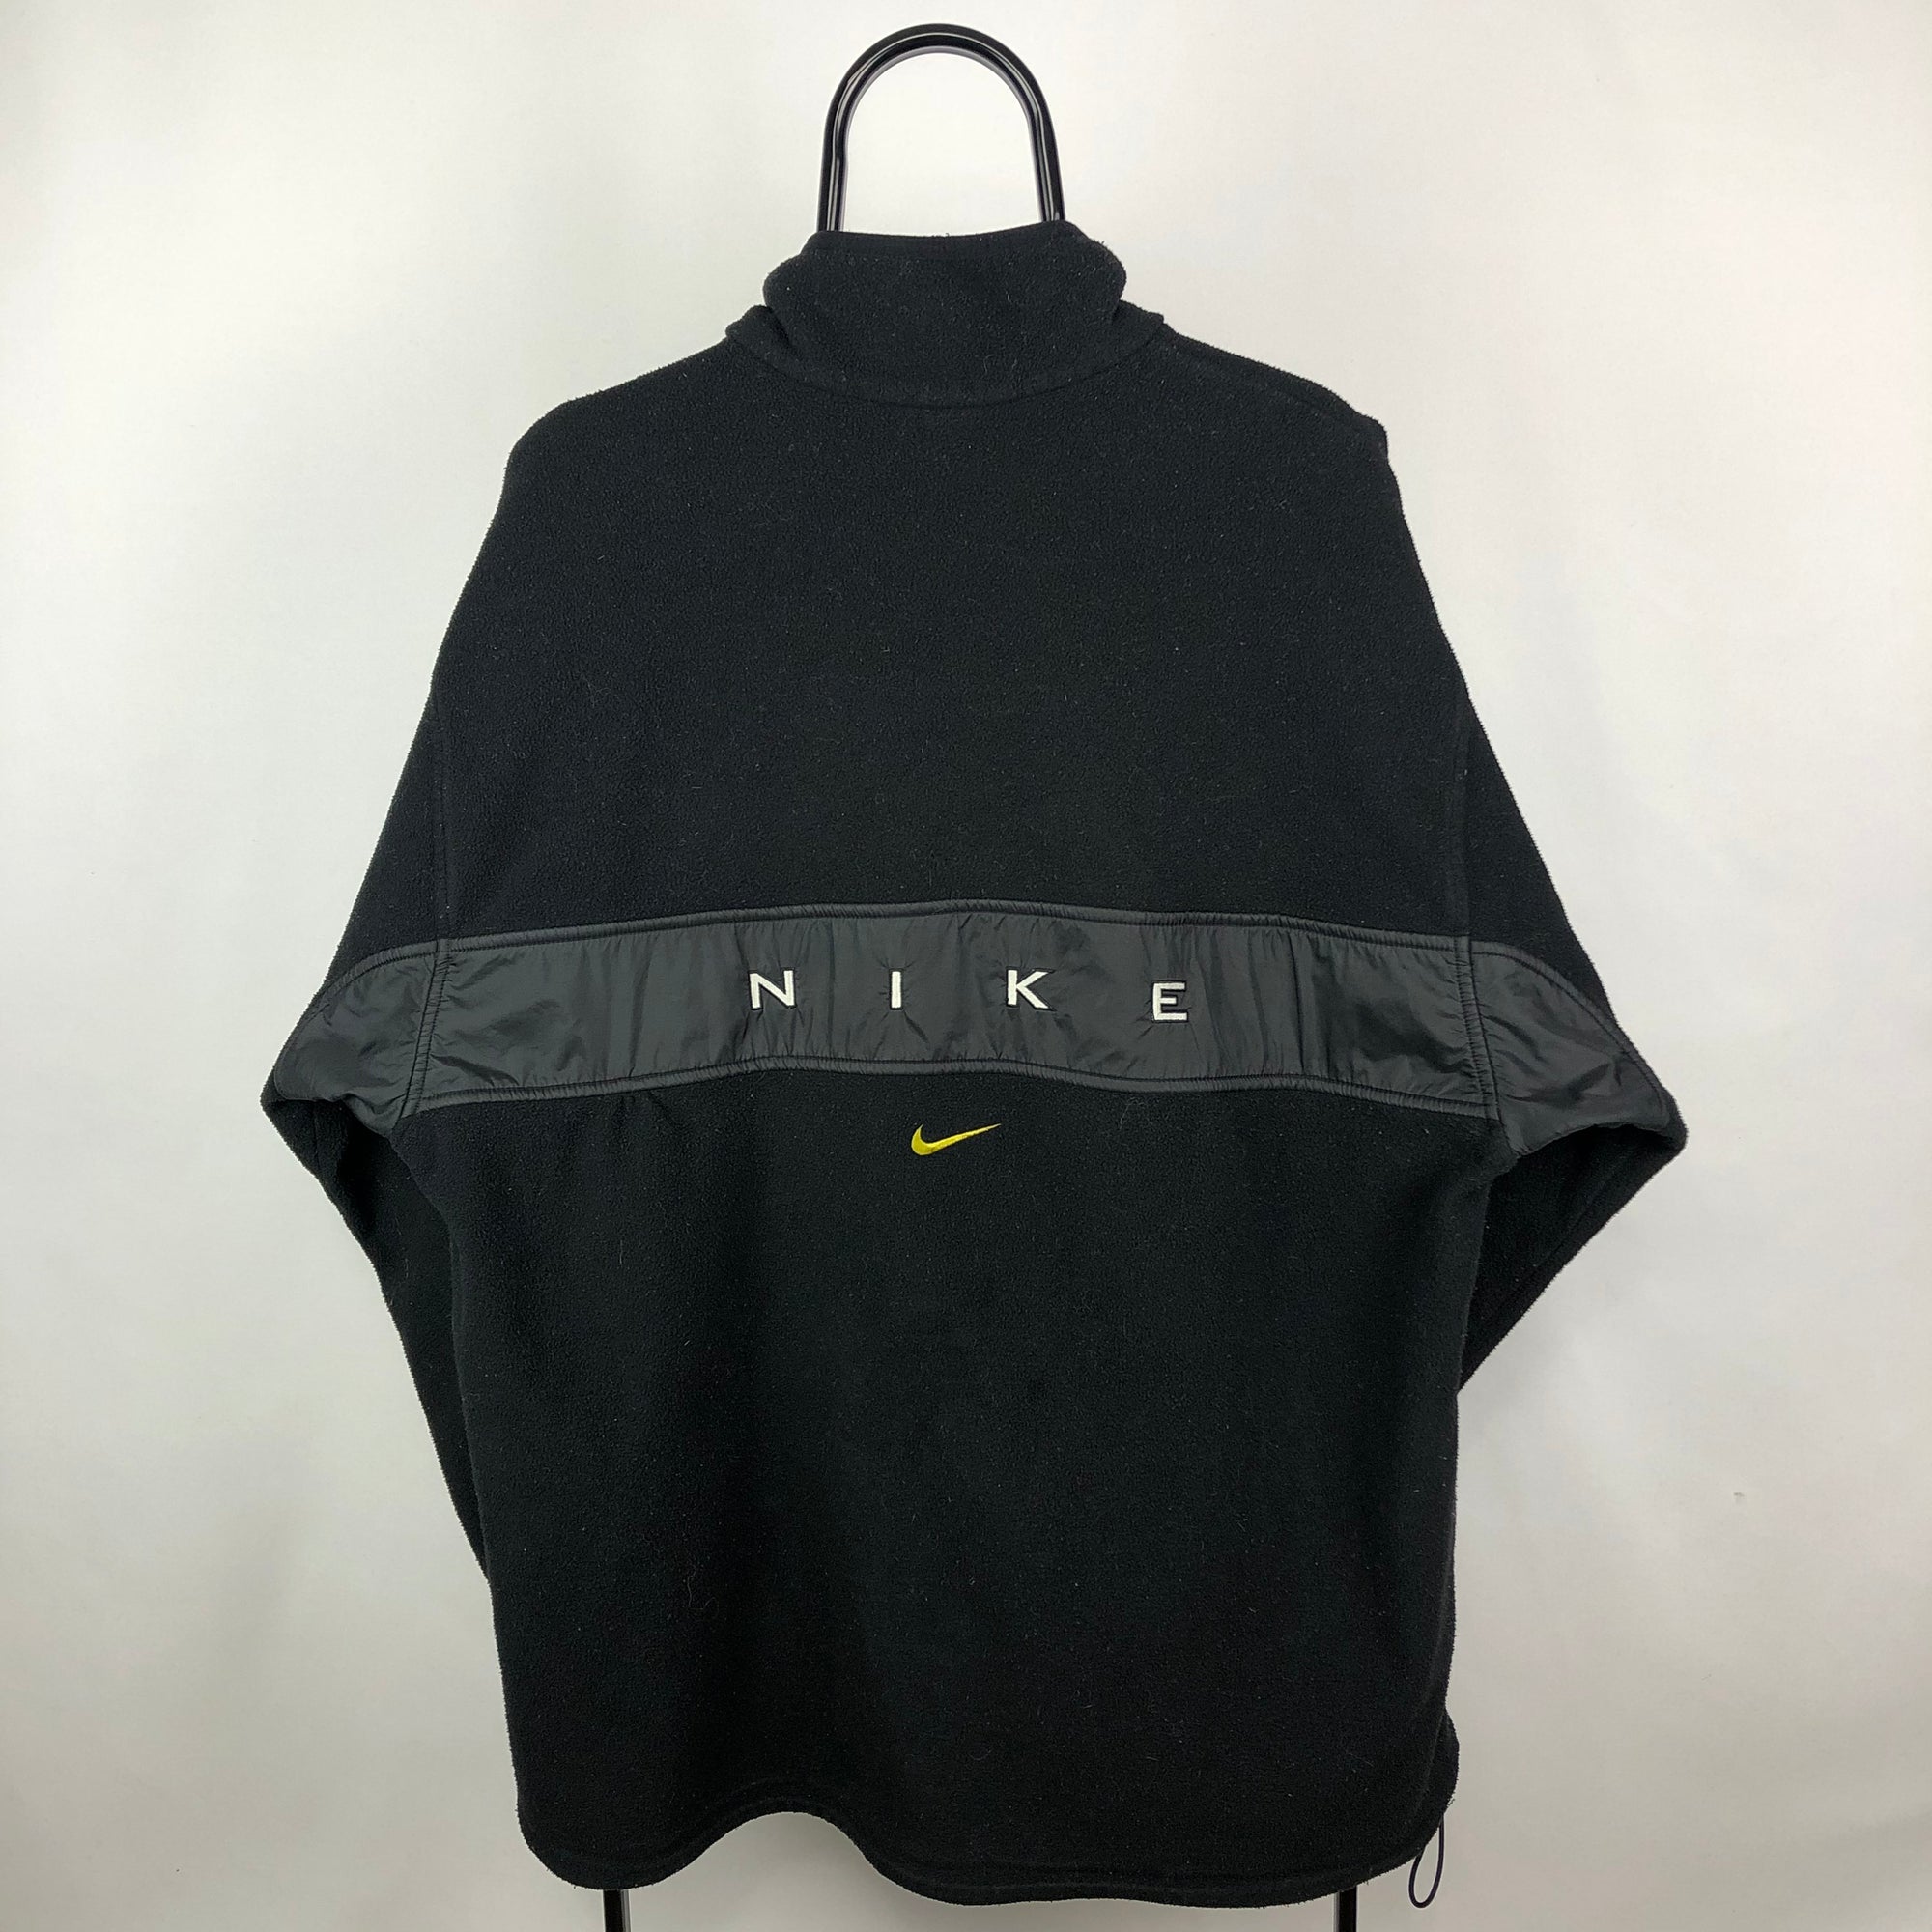 Vintage 90s Nike Spellout Fleece in Black/Gold - Men's Large/Women's XL